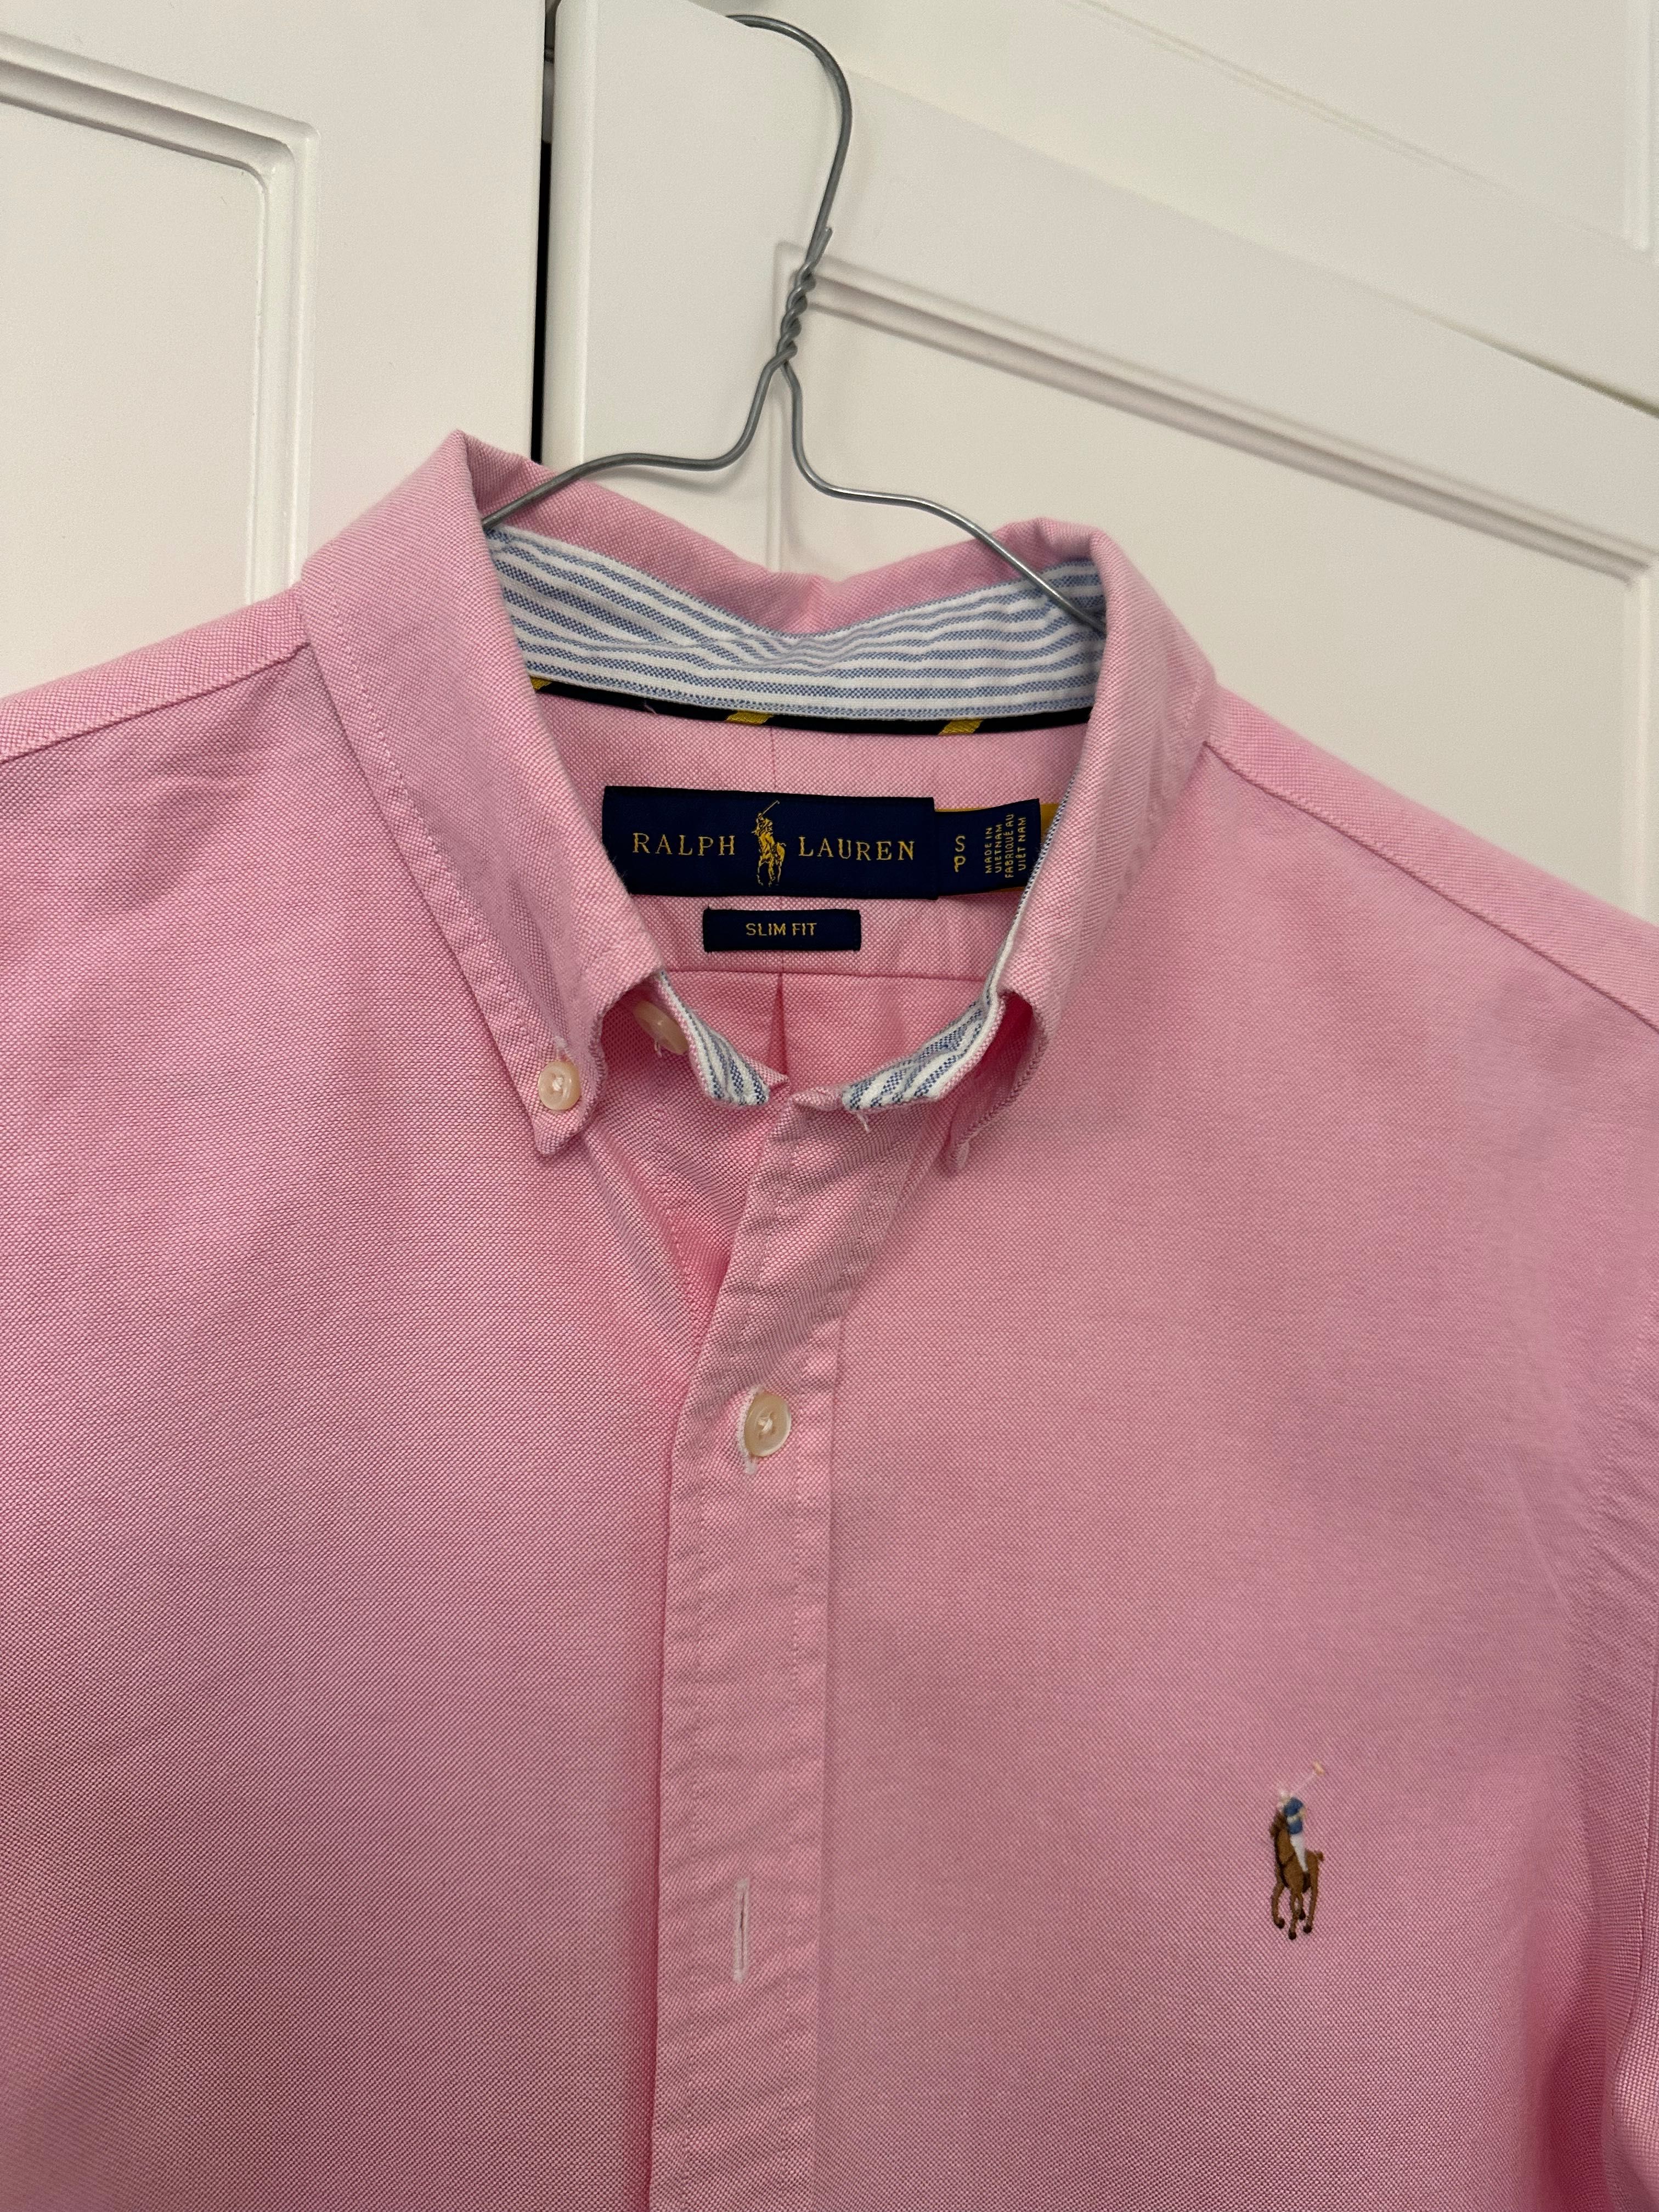 Koszula męska Polo Ralph Lauren, slim fit, S, różowa